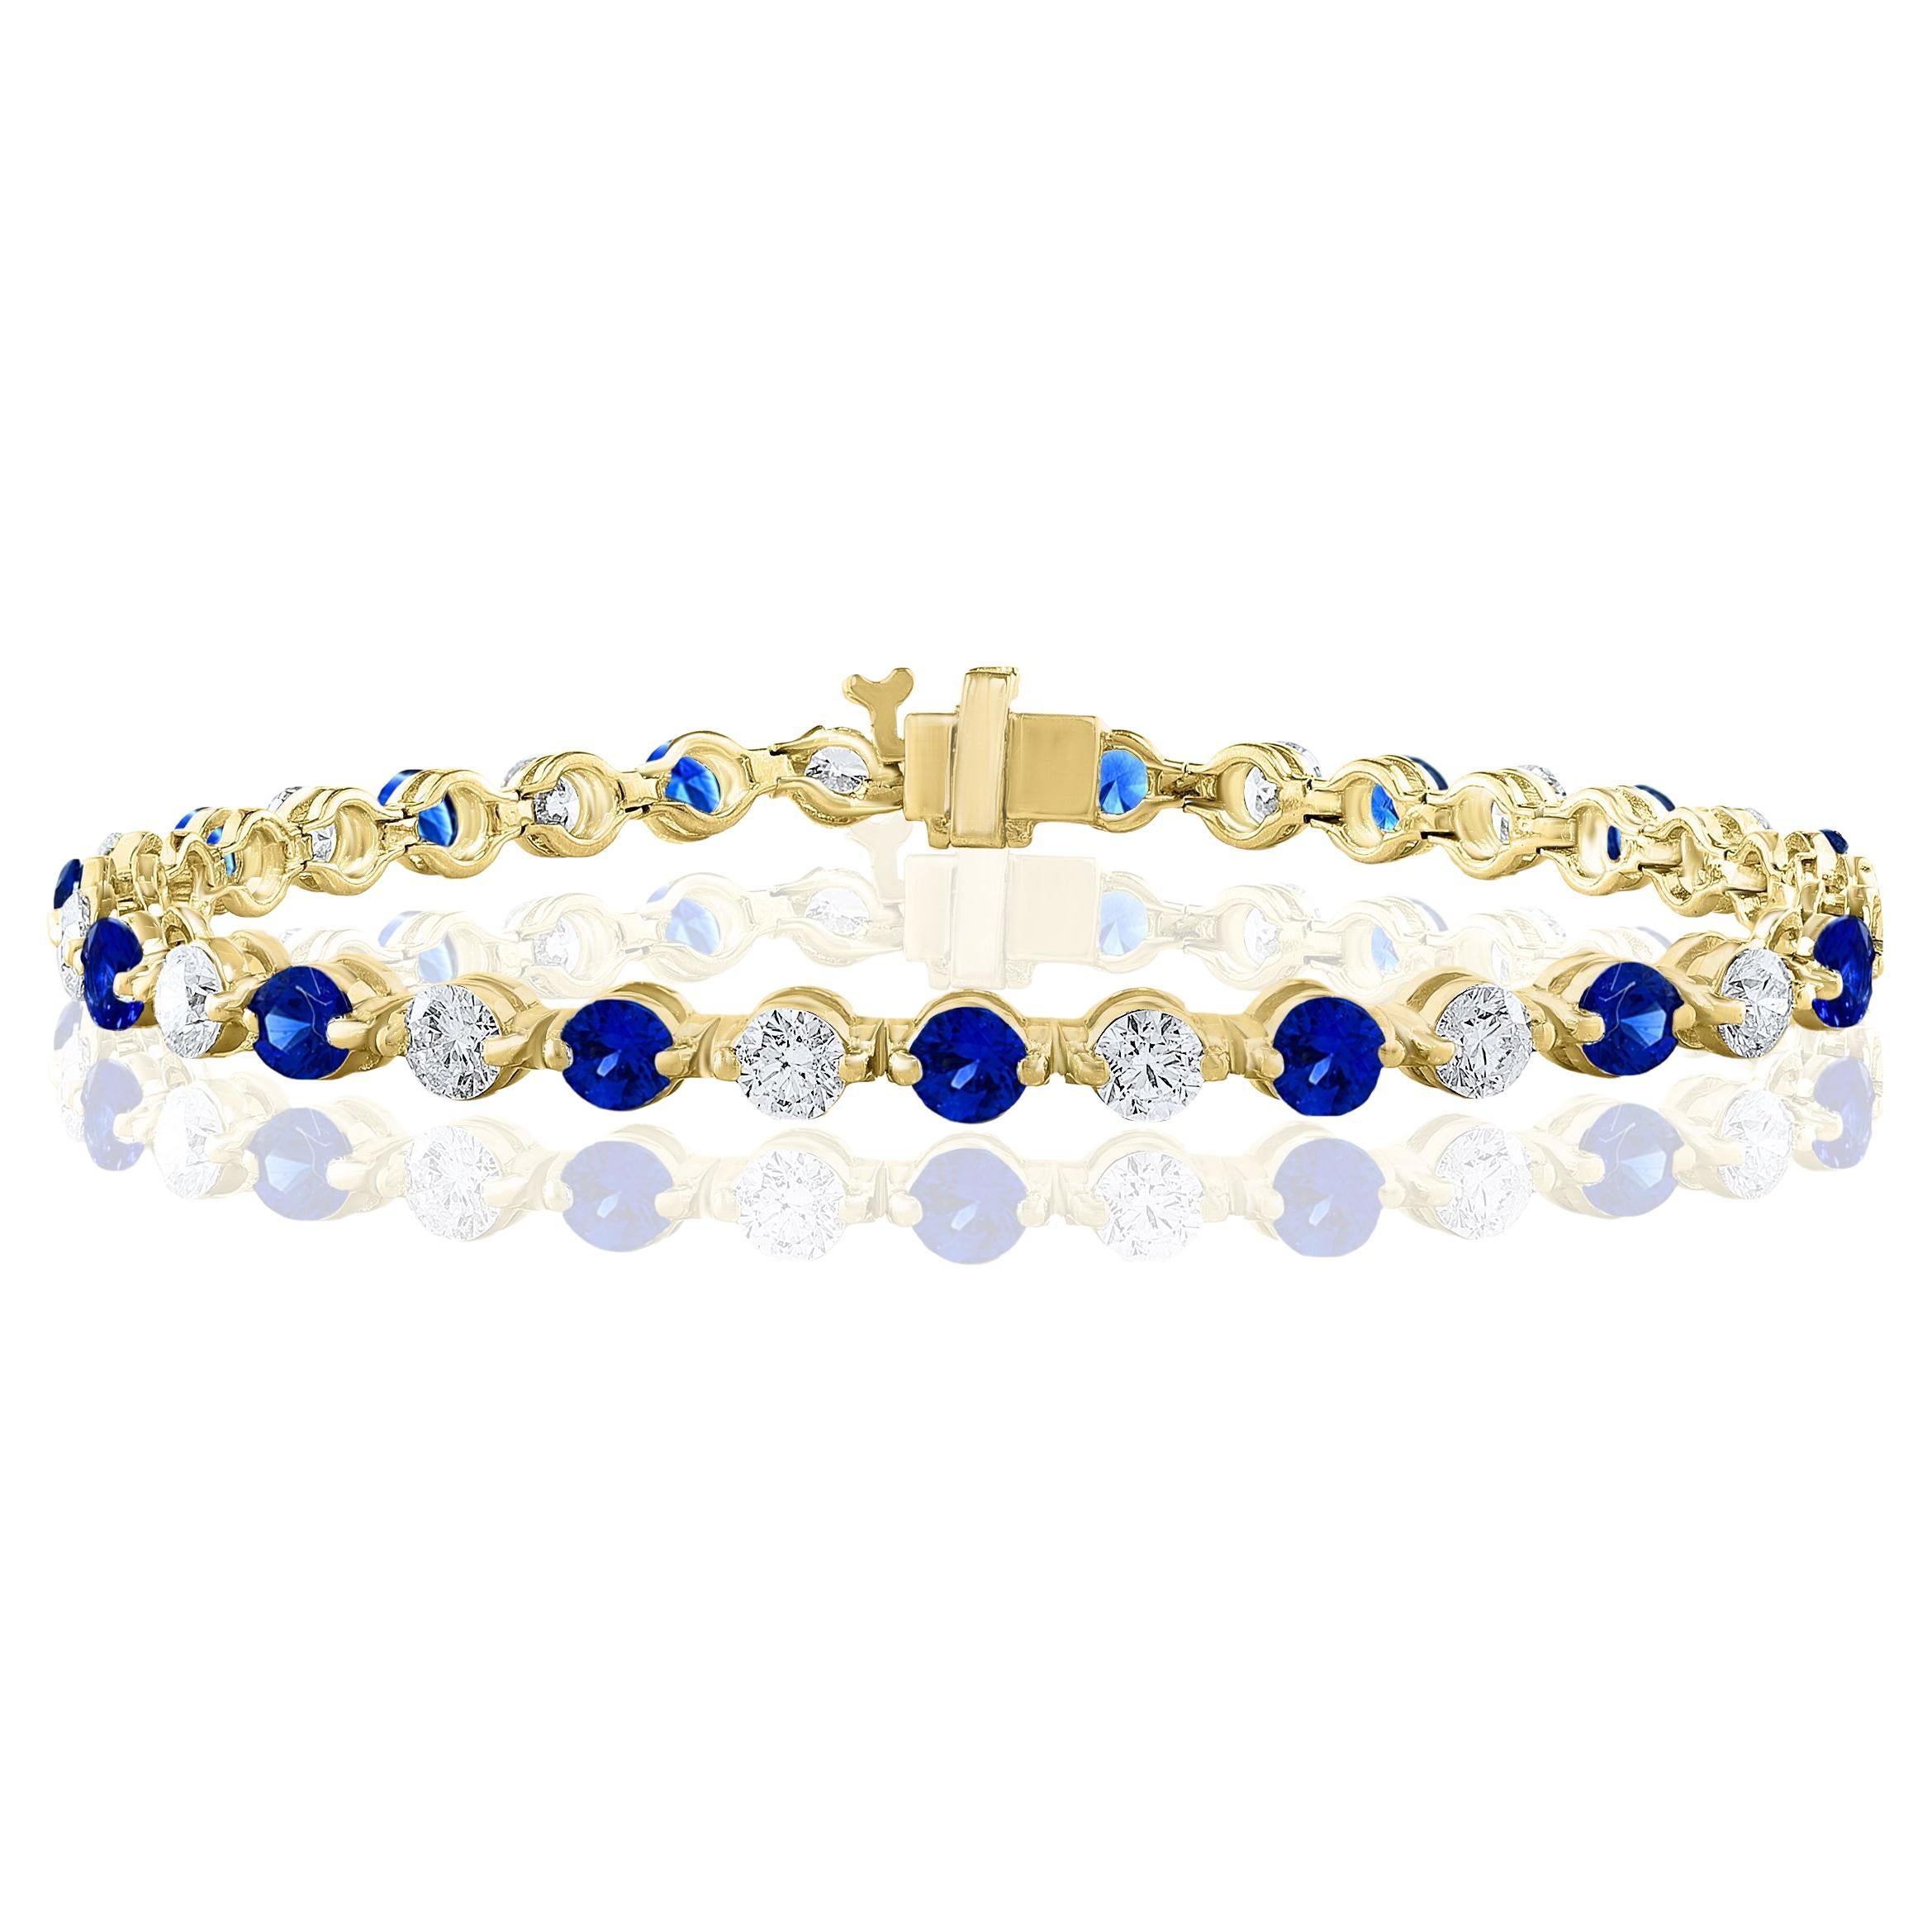 3.18 Carat Round Blue Sapphire and Diamond Bracelet in 14K Yellow Gold